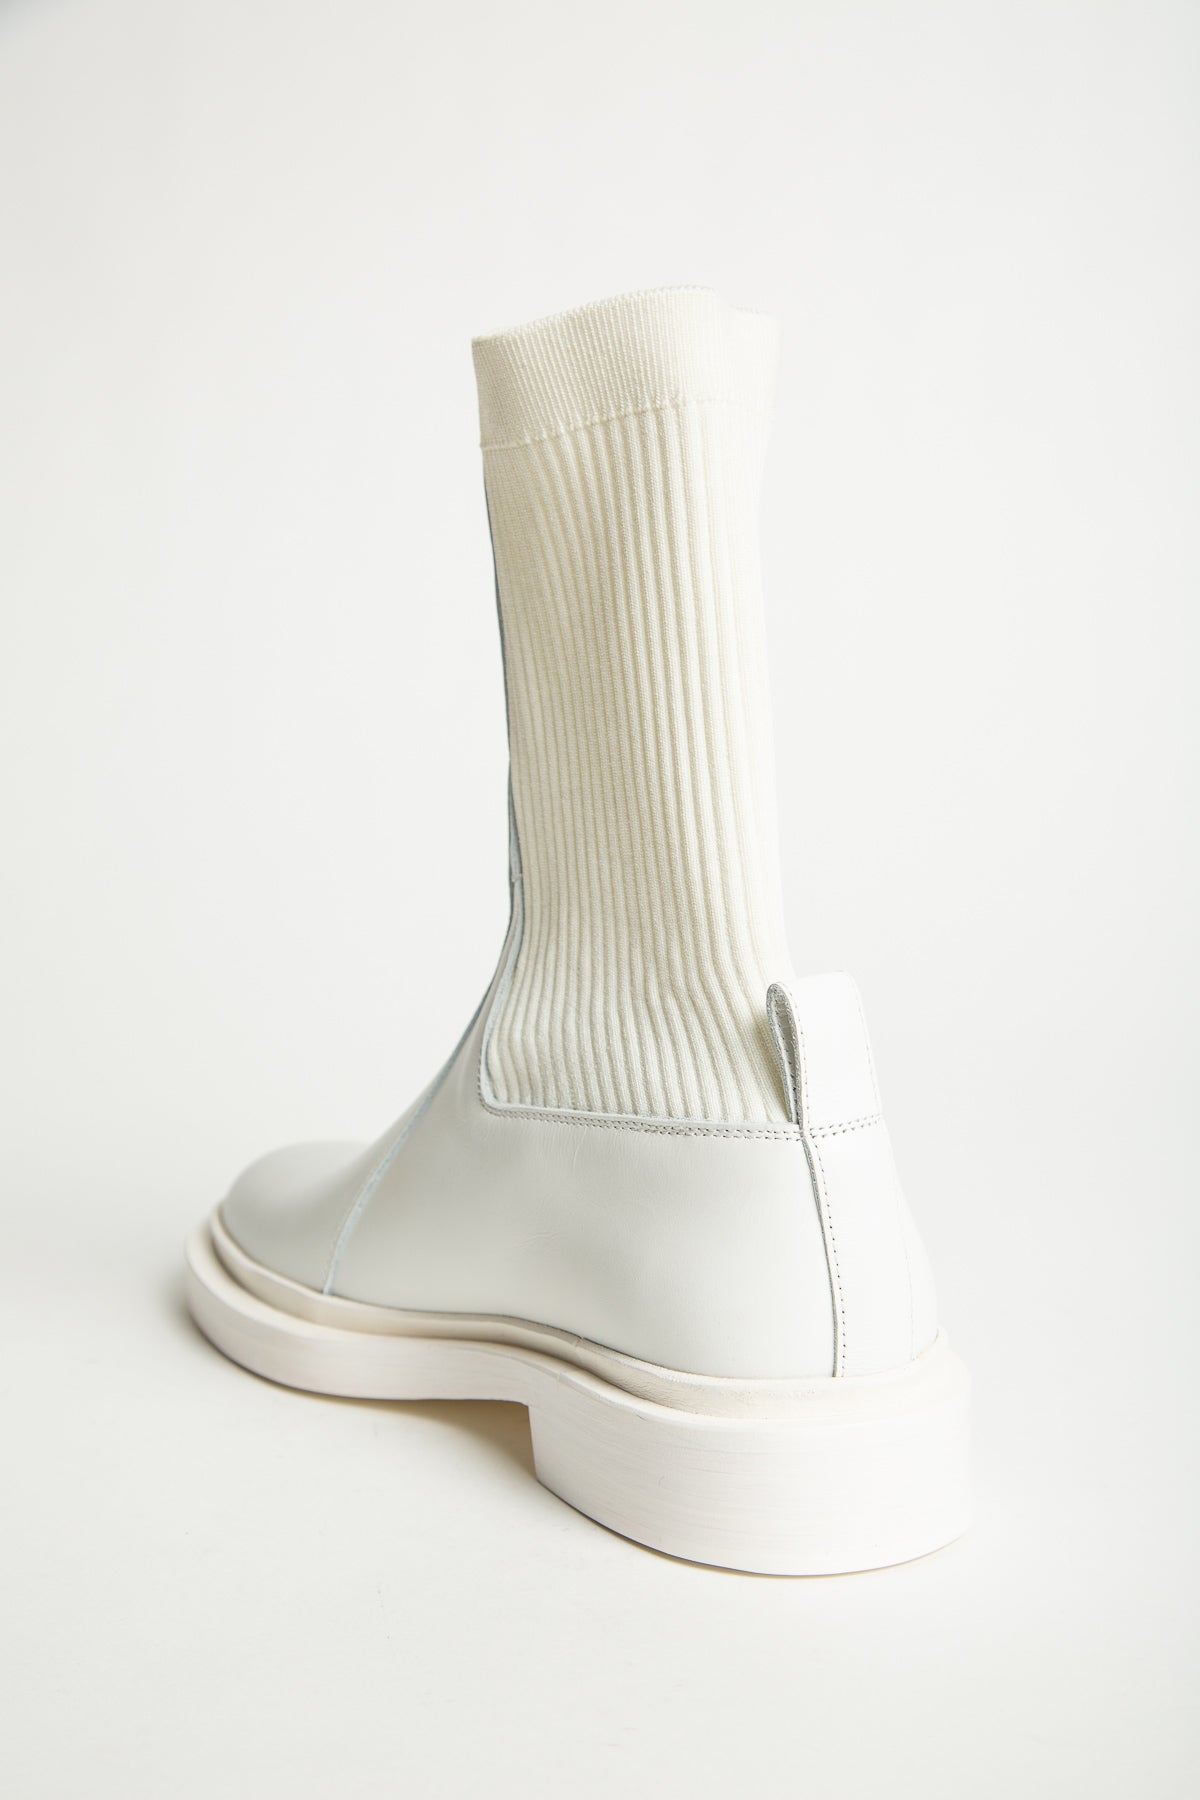 Jil Sander White Zip Boots